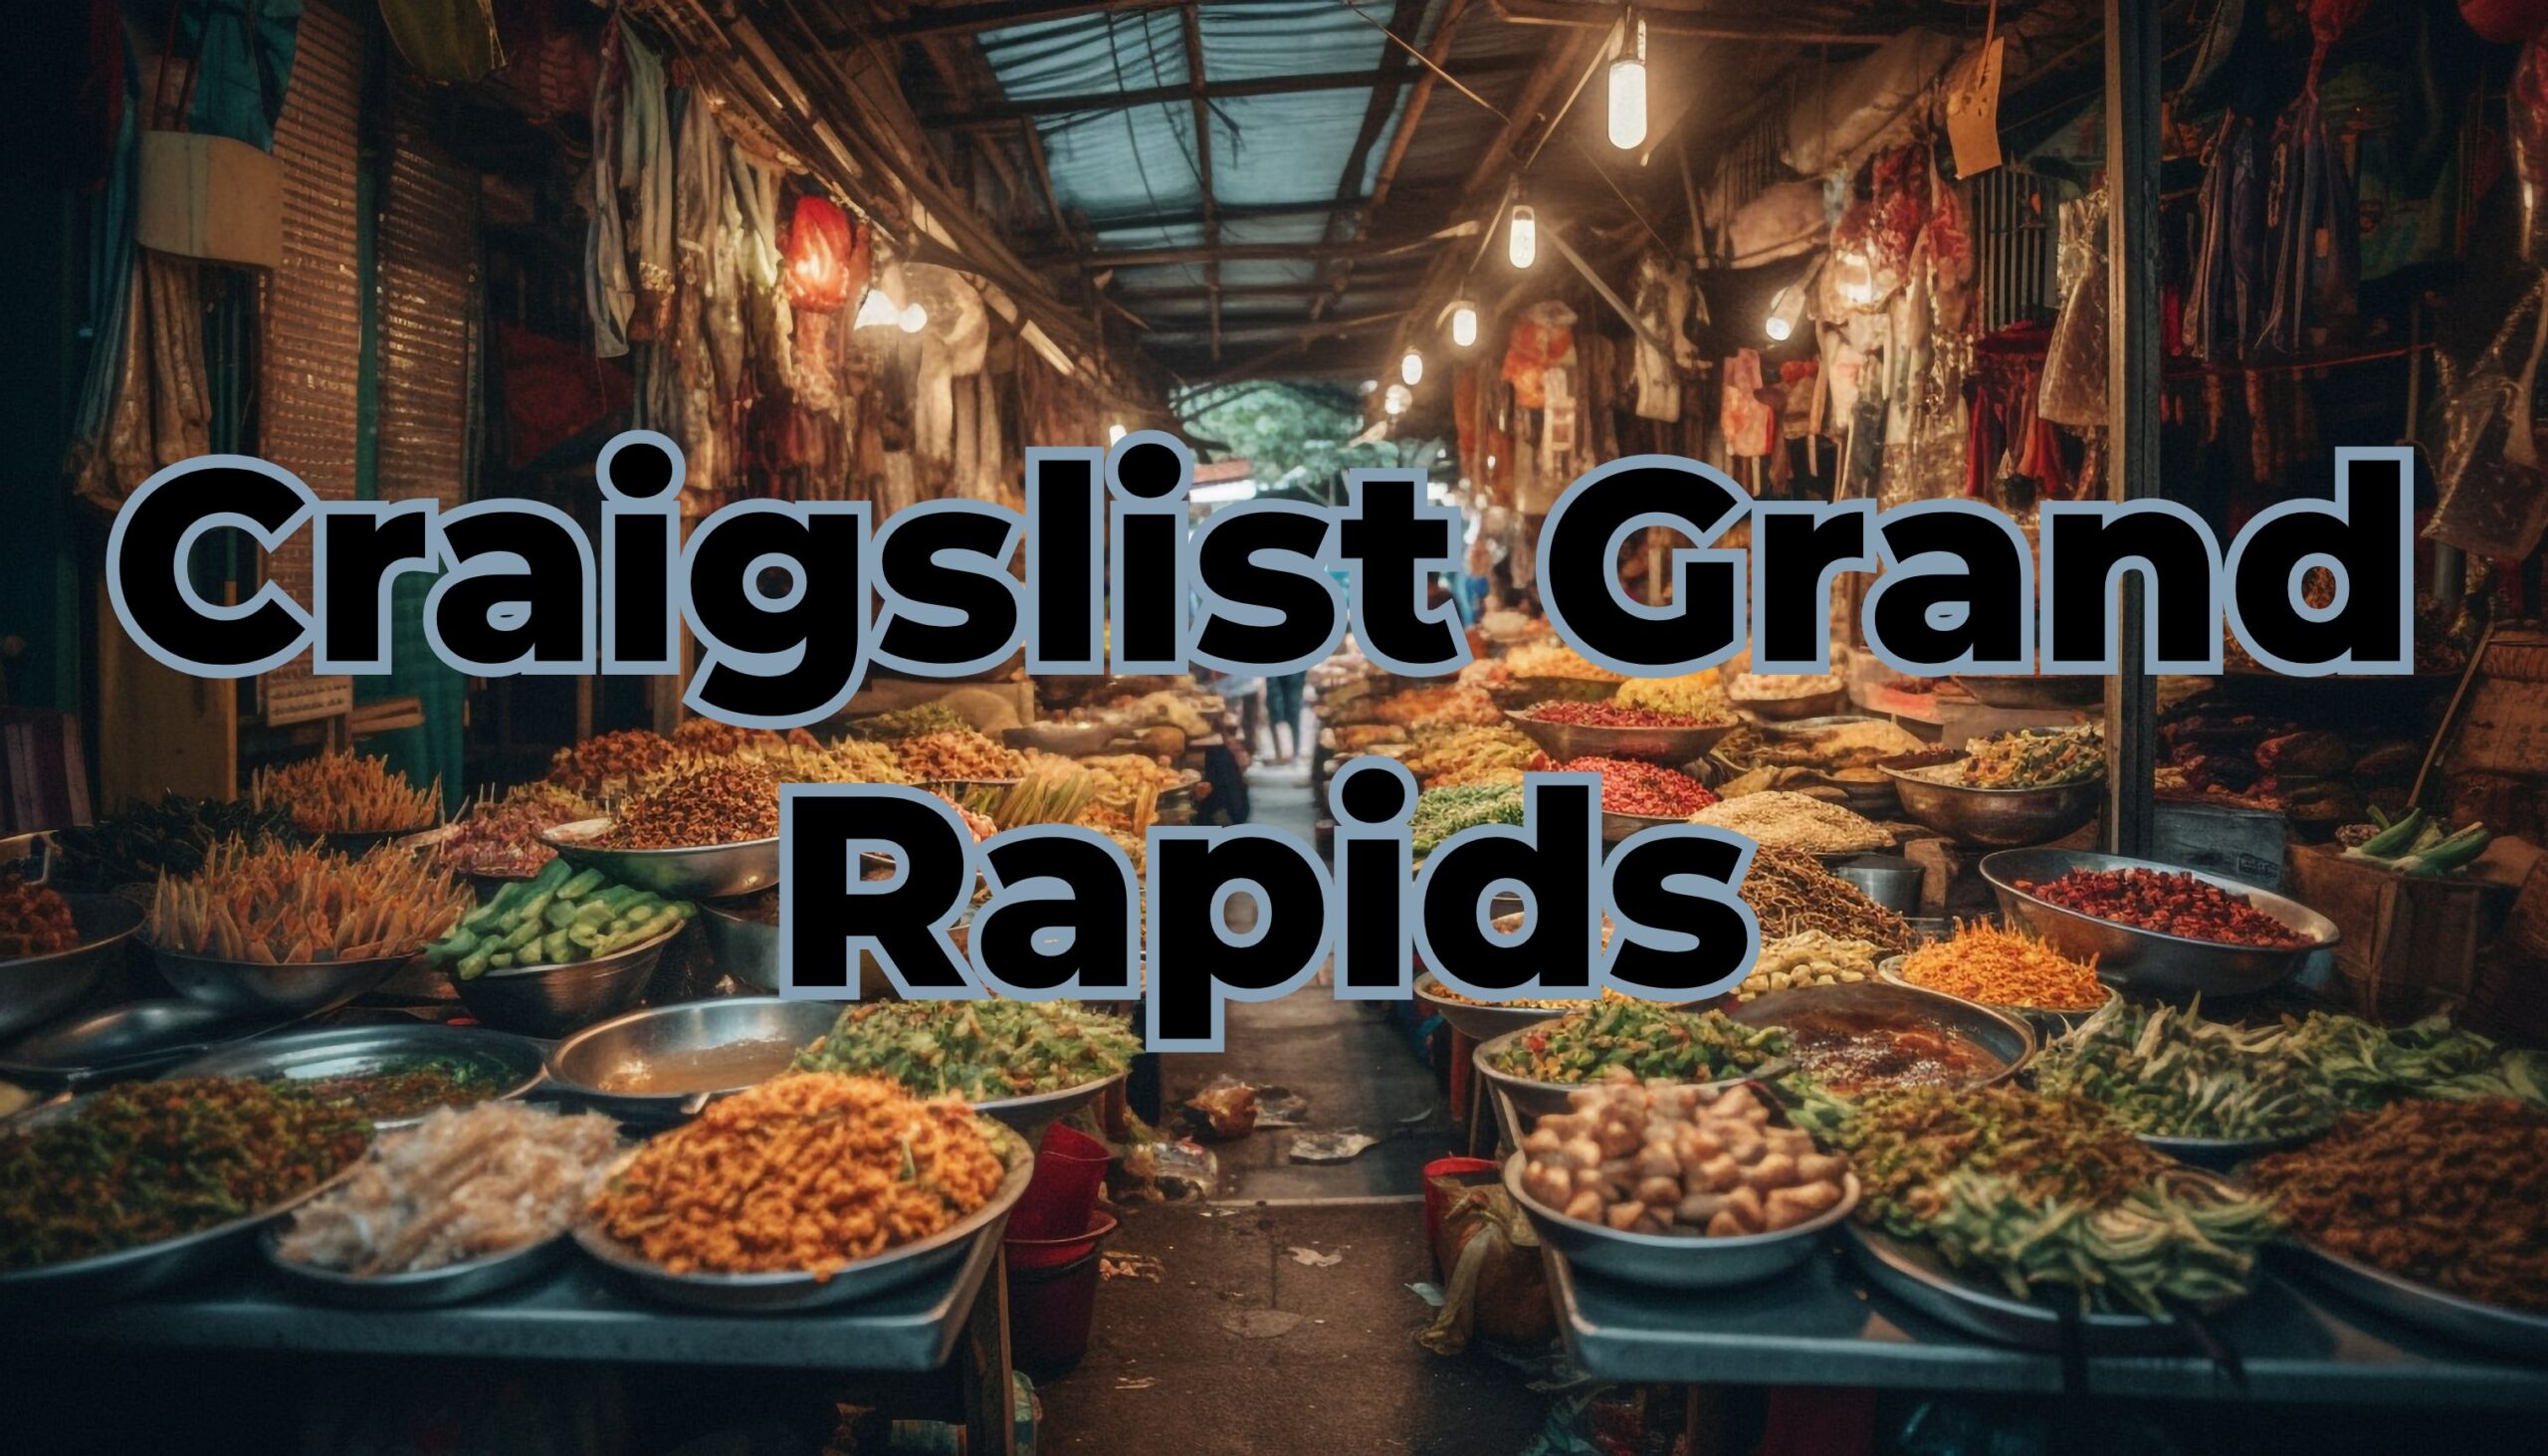 Grand Rapids Craigslist